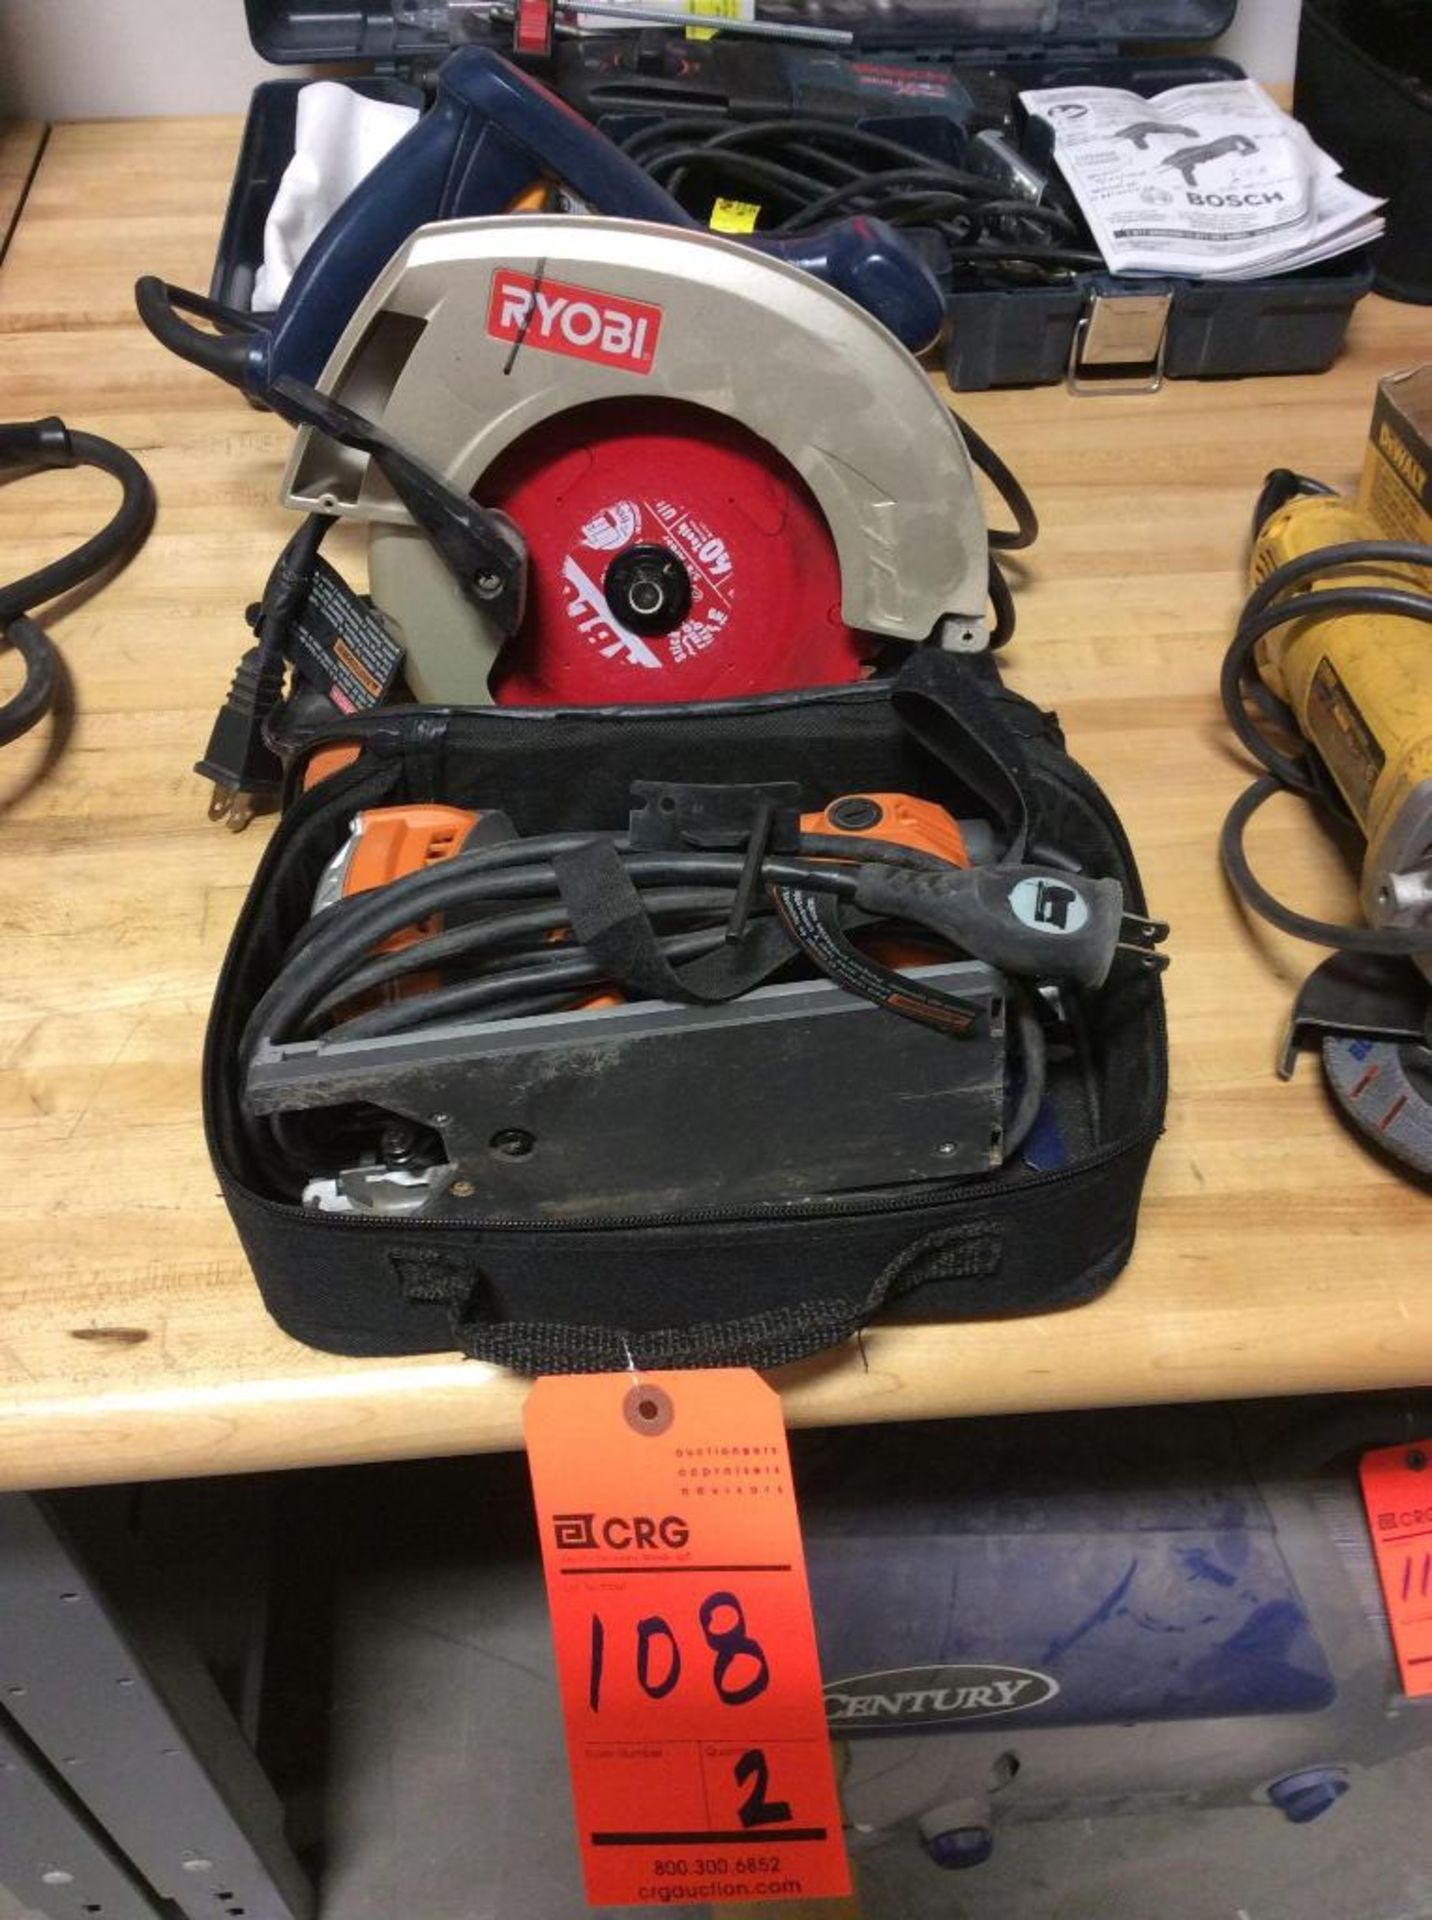 Lot of (2) ast hand tools including Ryobi 7 1/4 inch electric circular saw mn CSB123 and Ridgid jigs